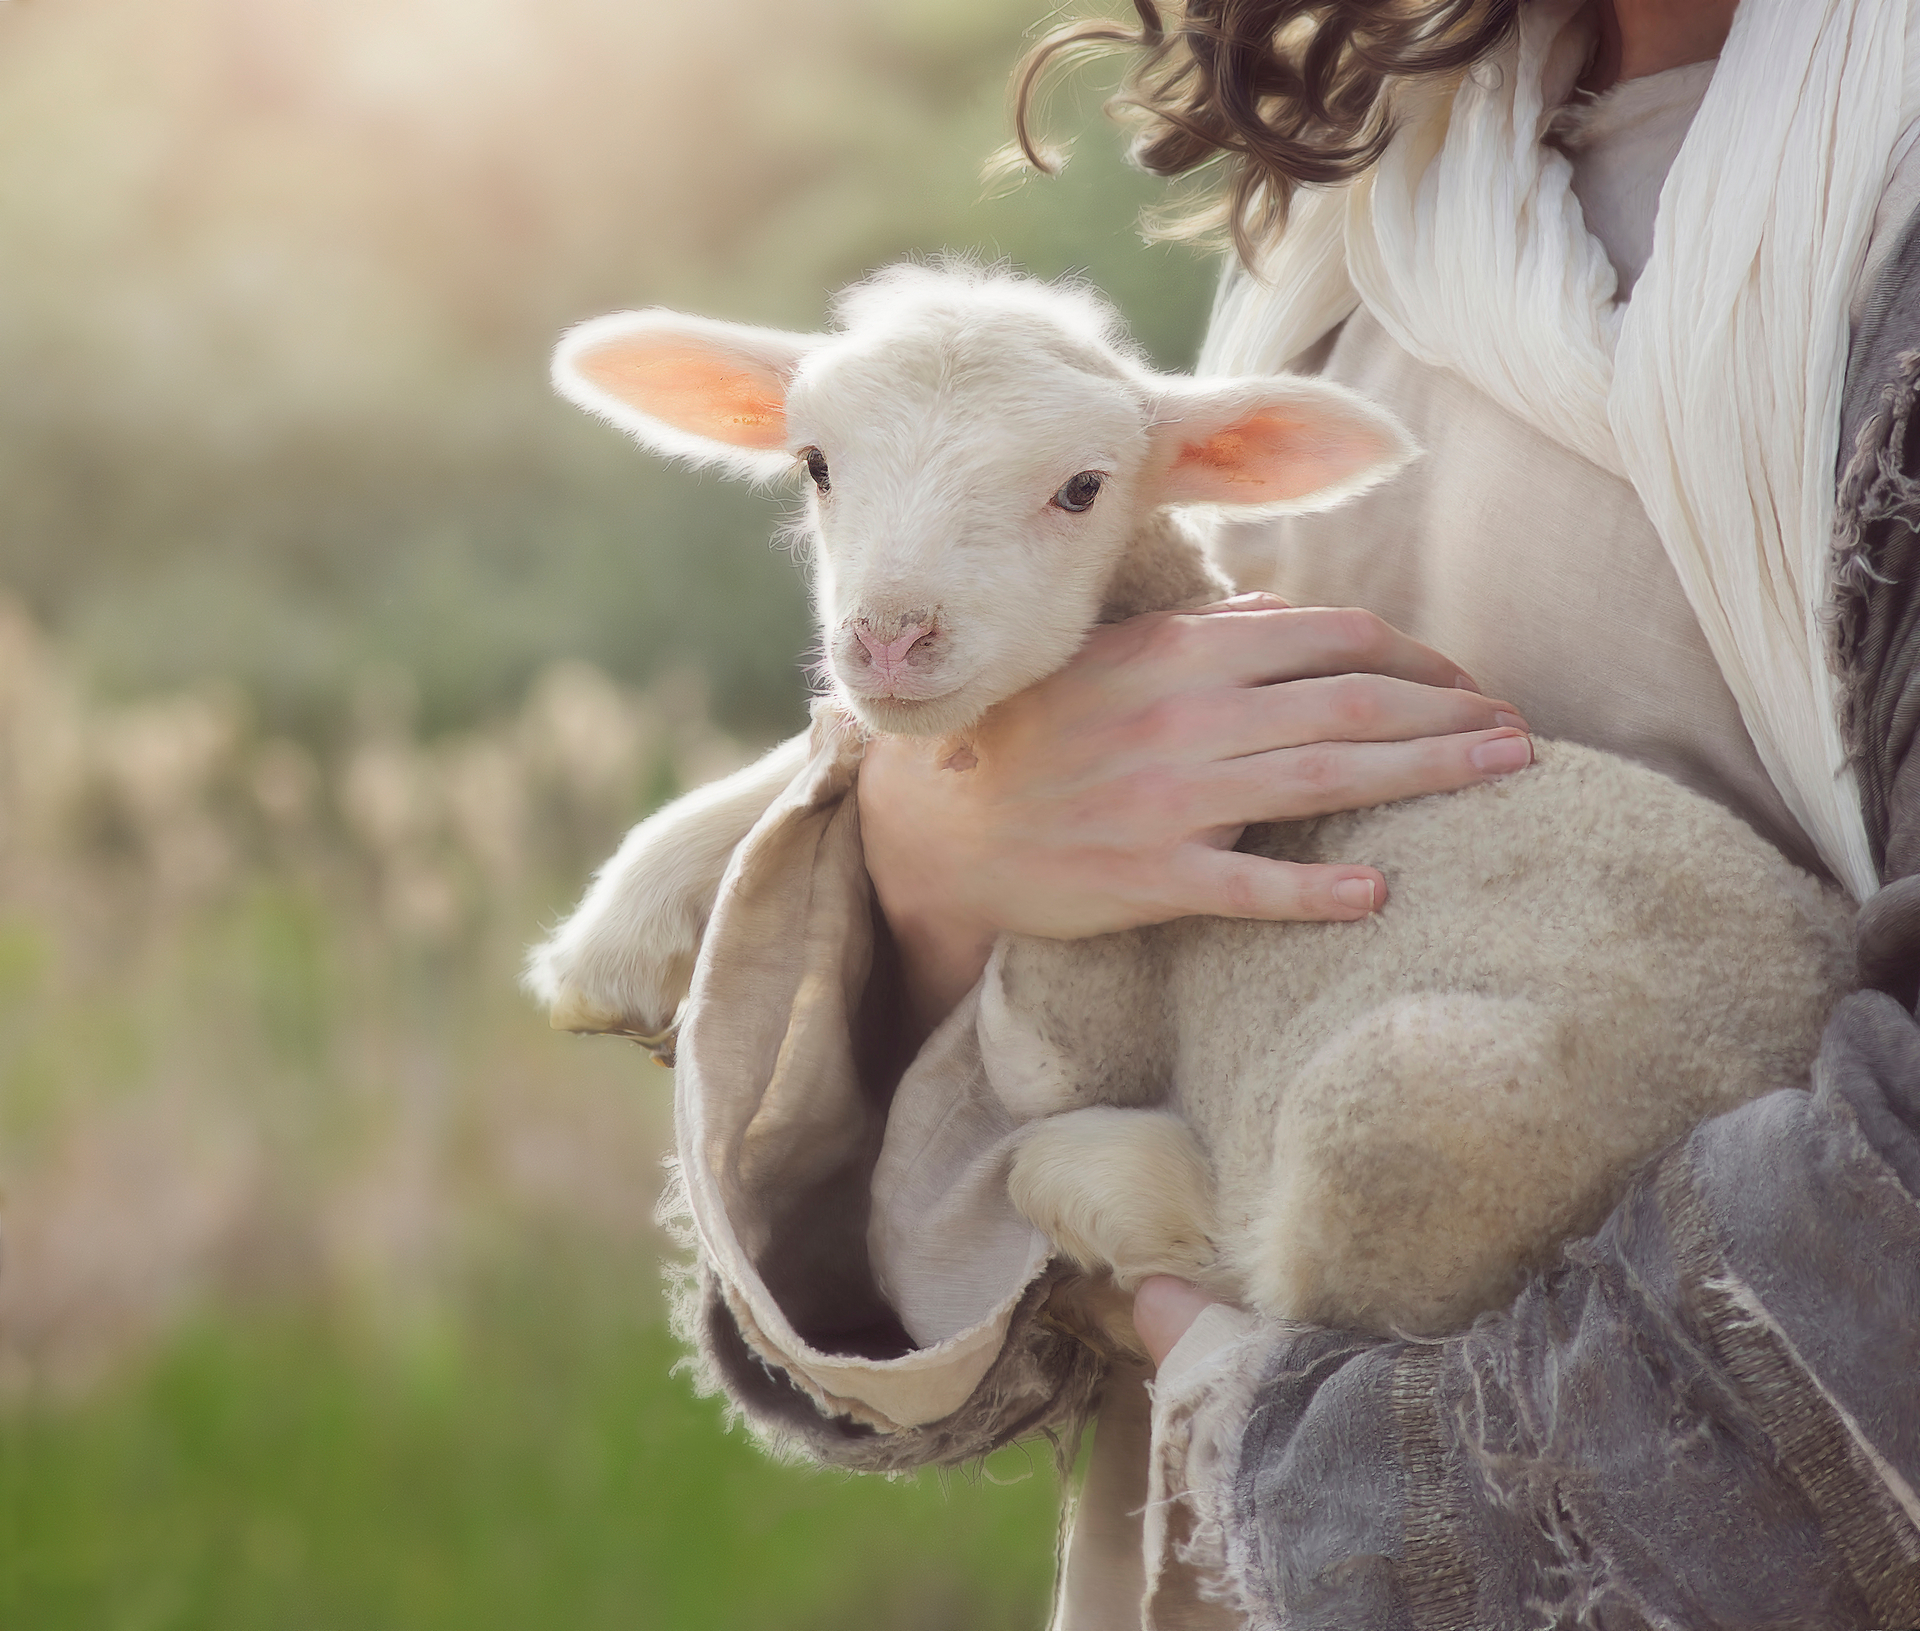 Christ holding a lamb. Photo © Kris L. • License: Shutter Stock • File ID: 1372826990